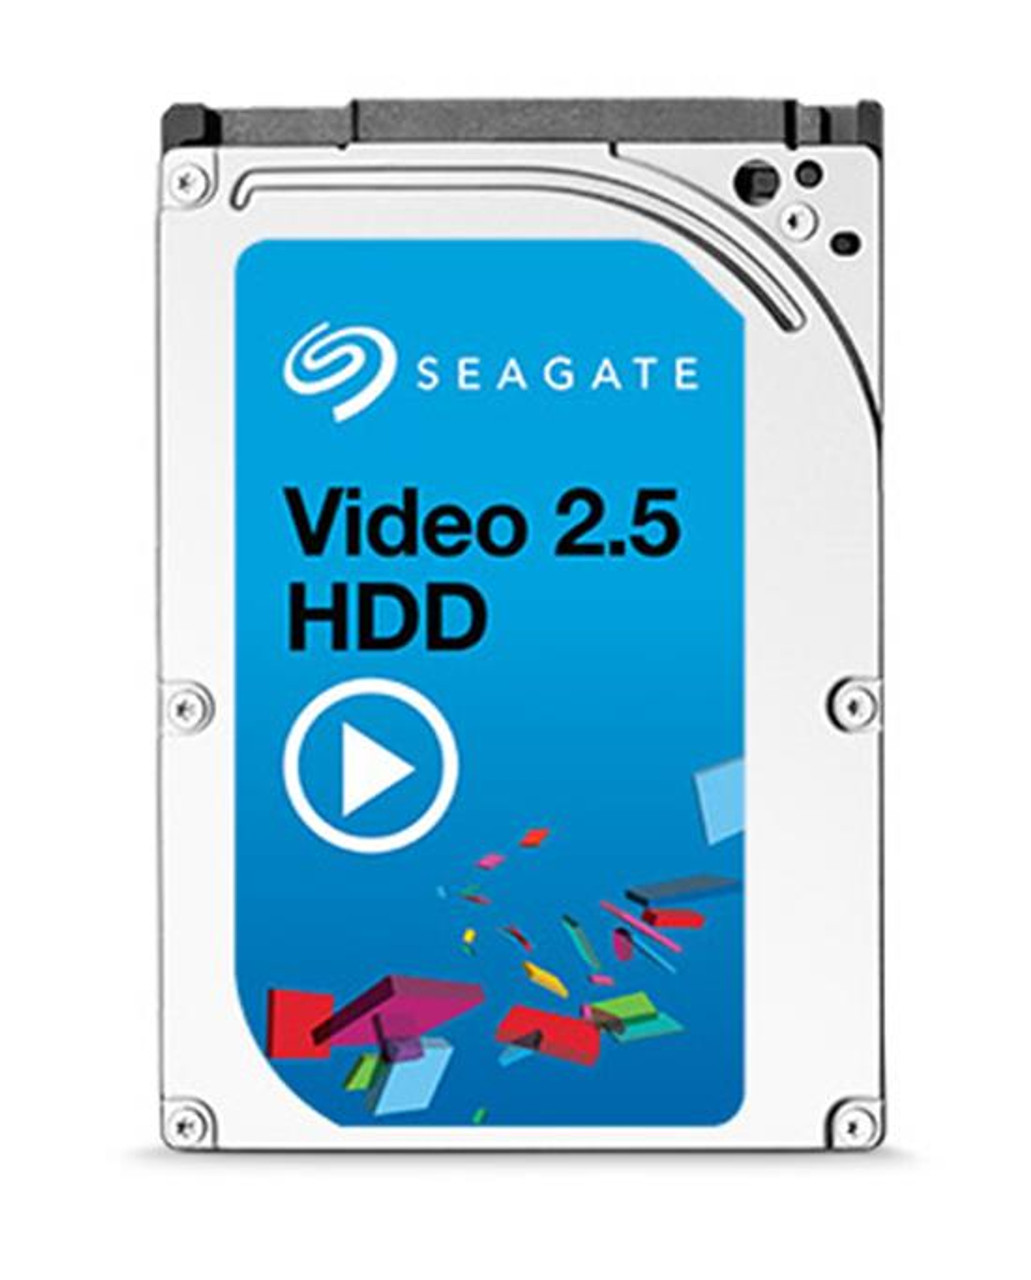 1DK142-915 Seagate Video 2.5 500GB 5400RPM SATA 6Gbps 16MB Cache 2.5-inch Internal Hard Drive